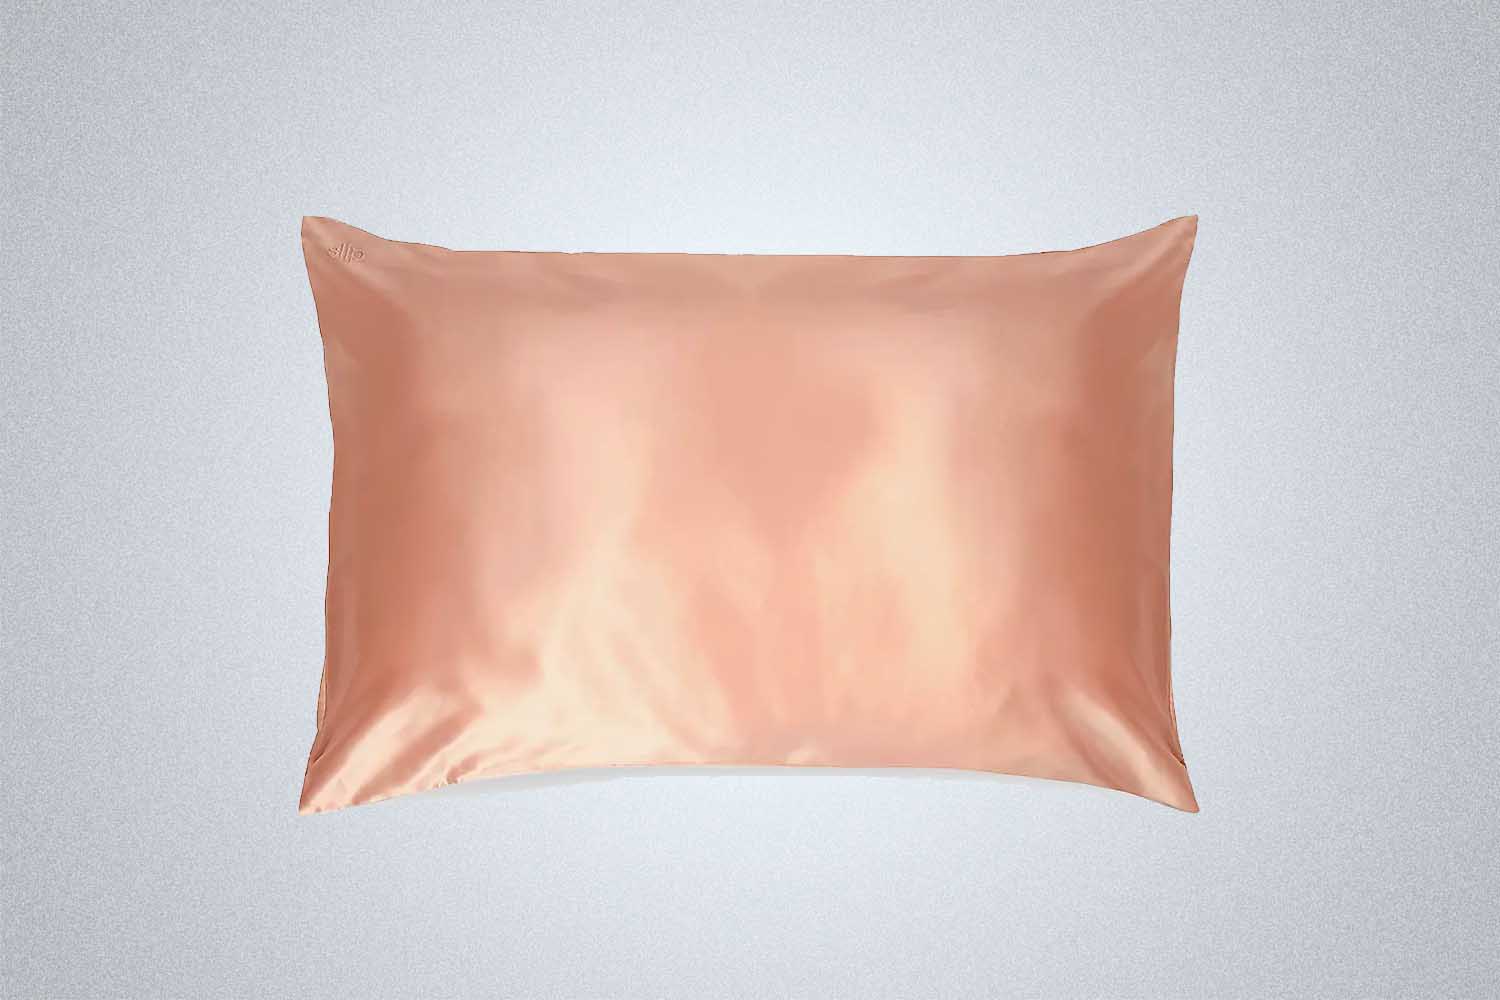 slip Silk Pillowcase, now on sale